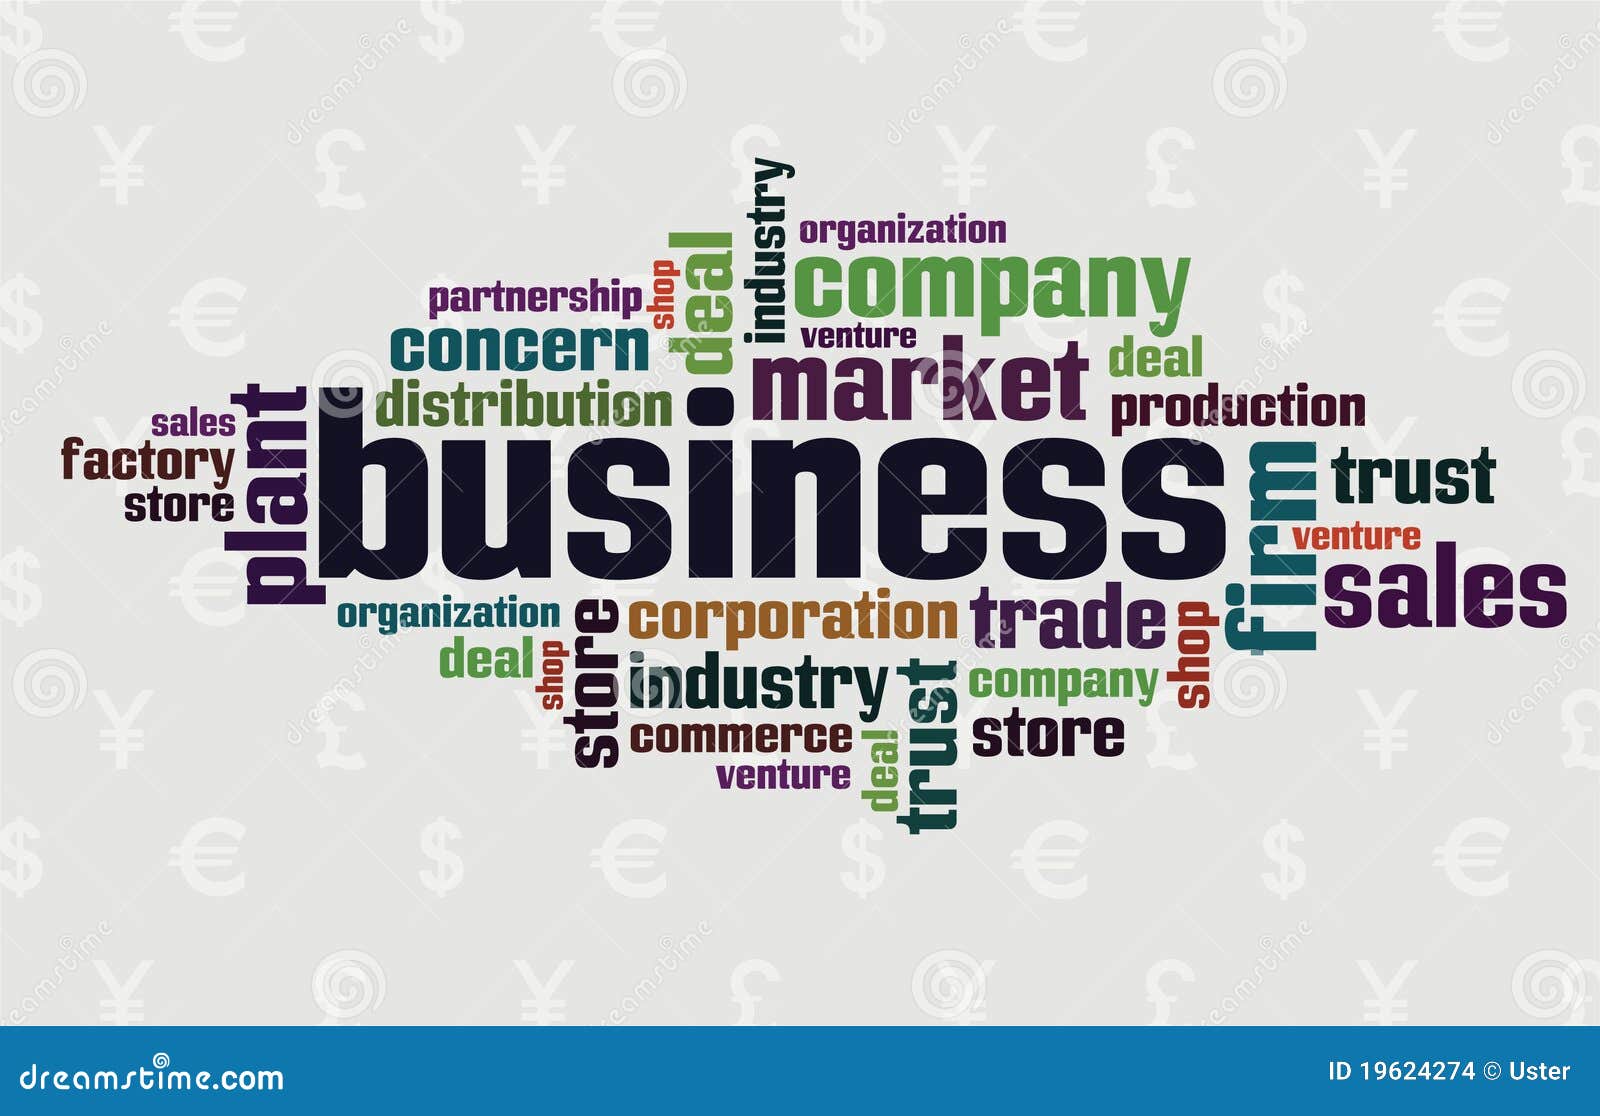 wordcloud of business